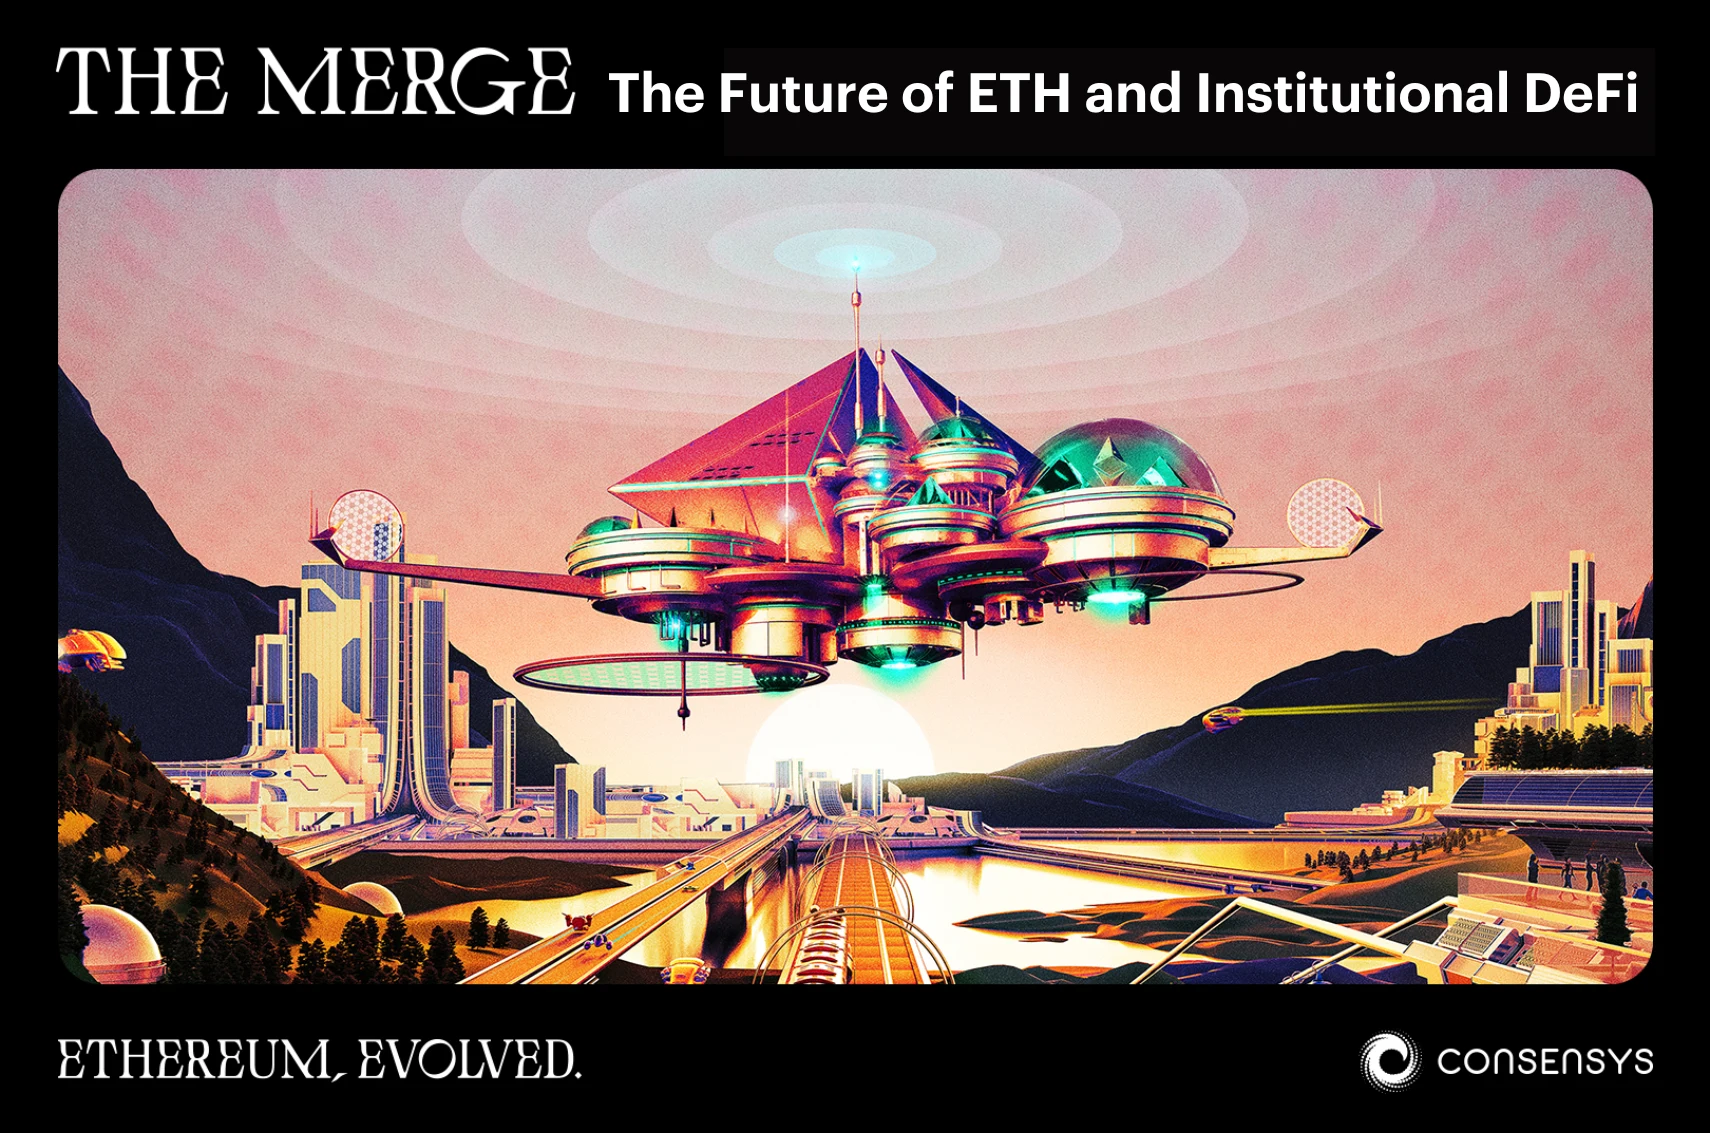 Image: Future of Institutional DeFi and Ethereum